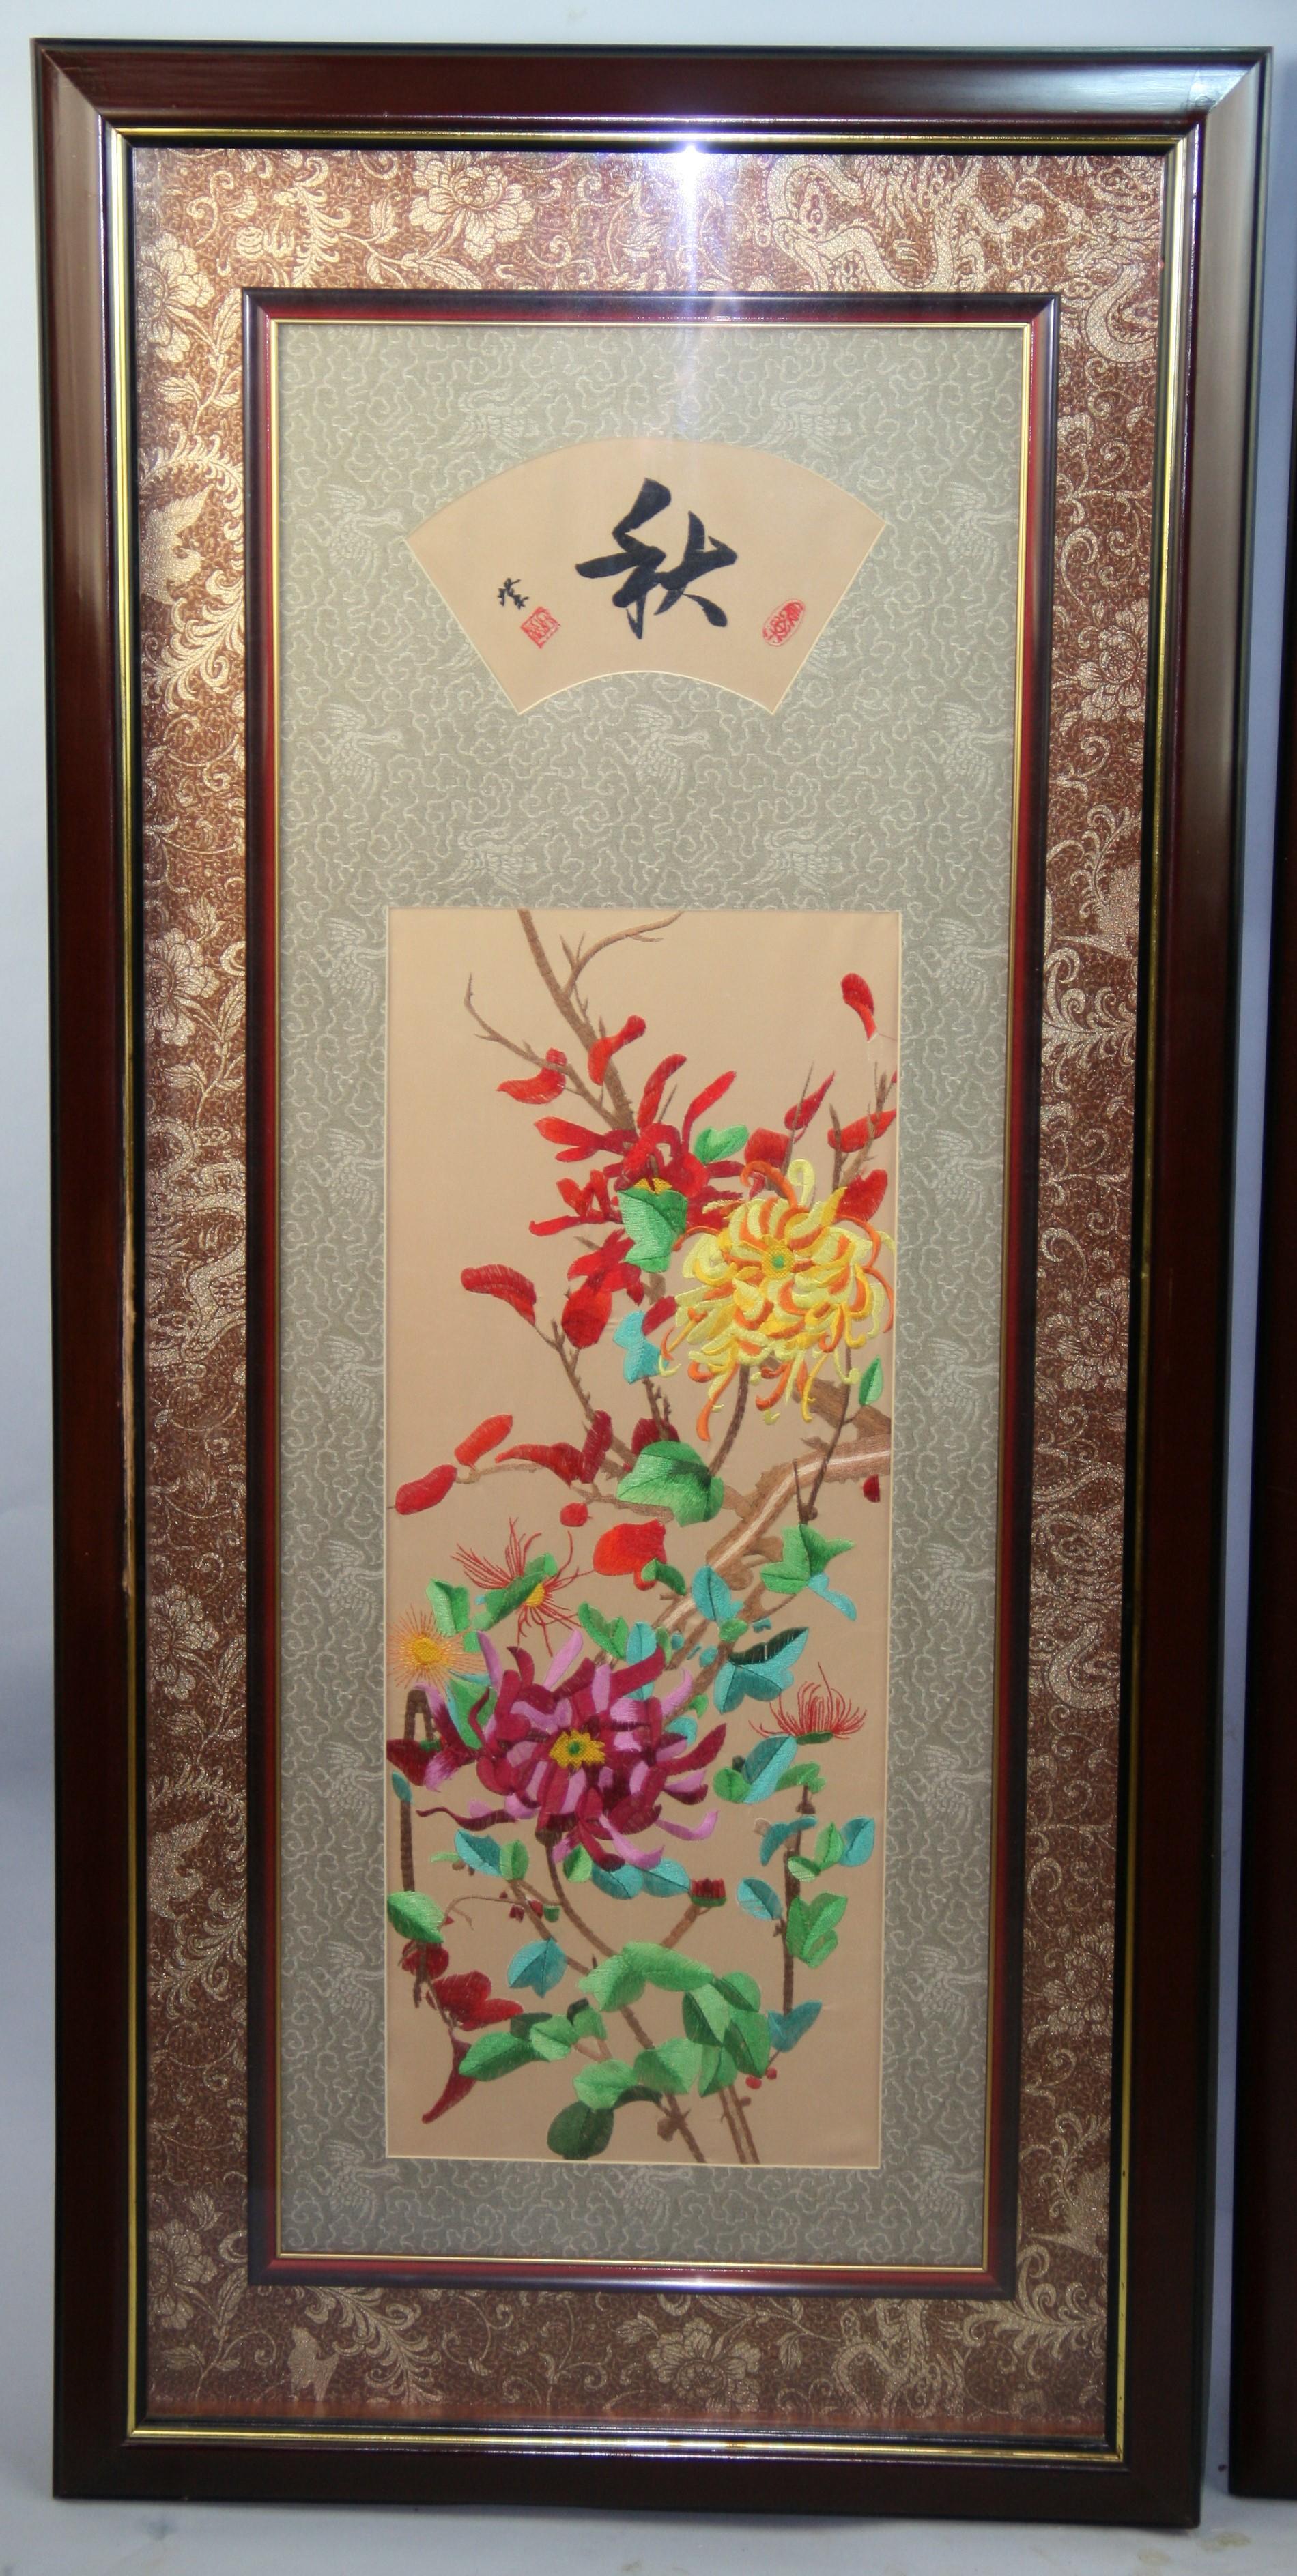 Pair silk floral panels set in wood frames
each panel 22 x 47